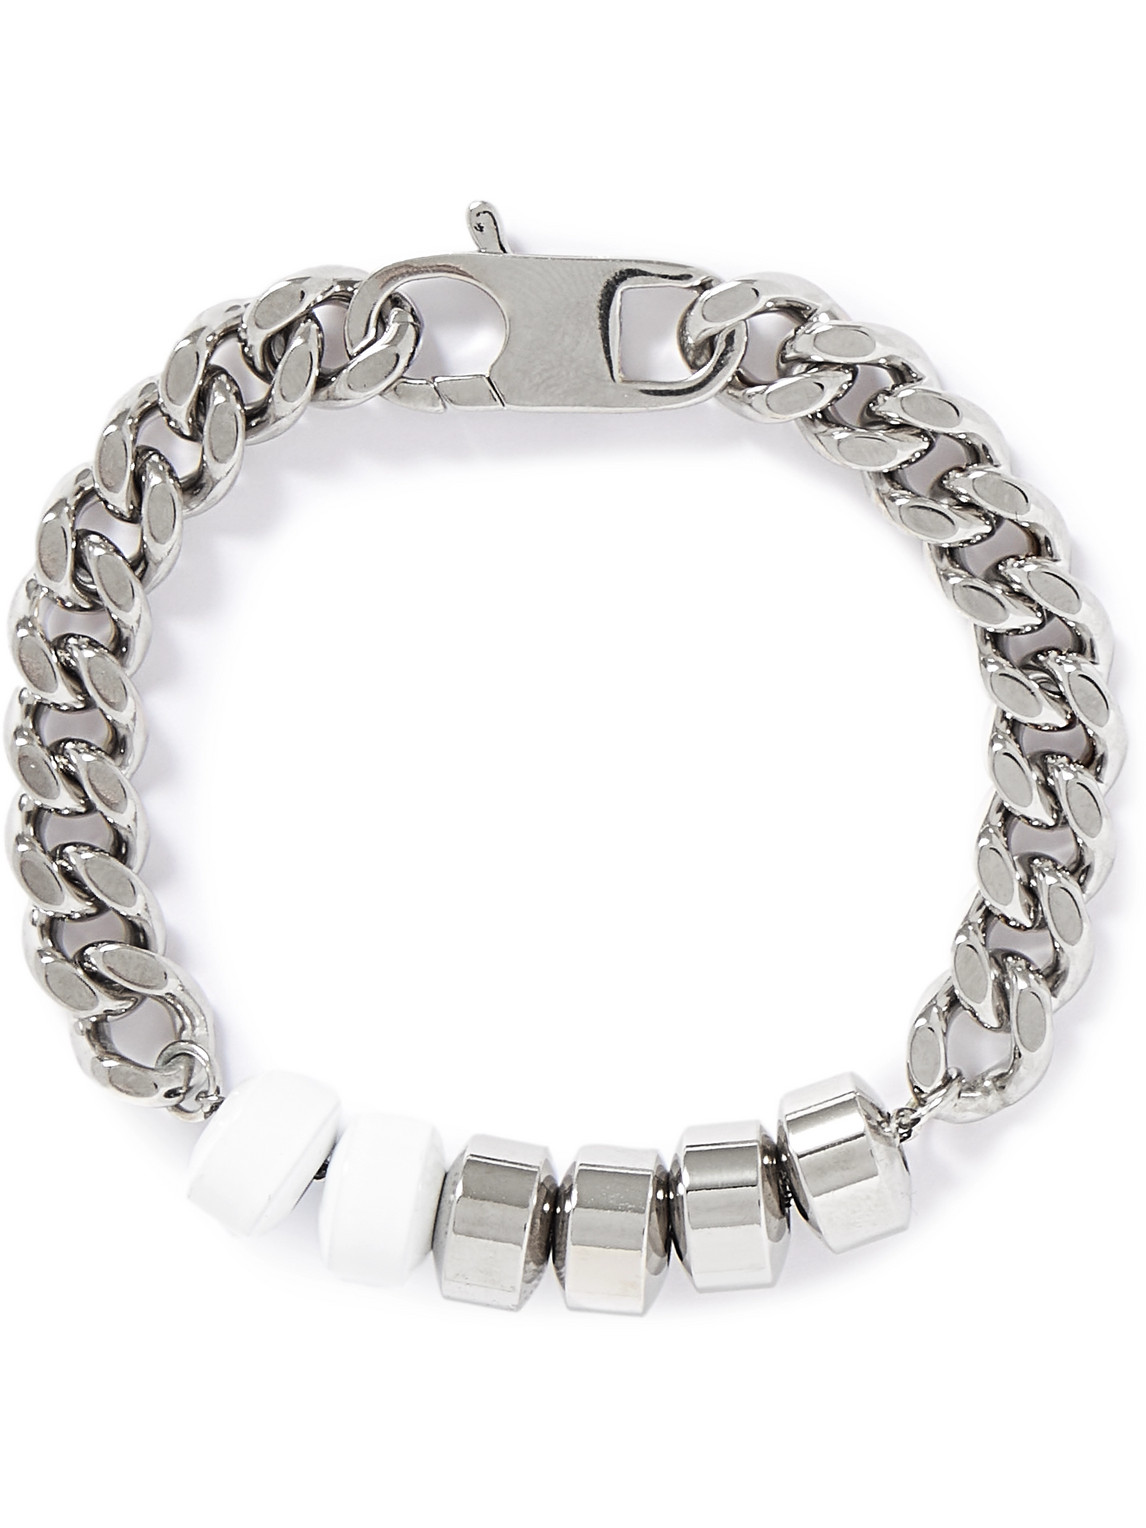 Silver-Tone and Enamel Bracelet